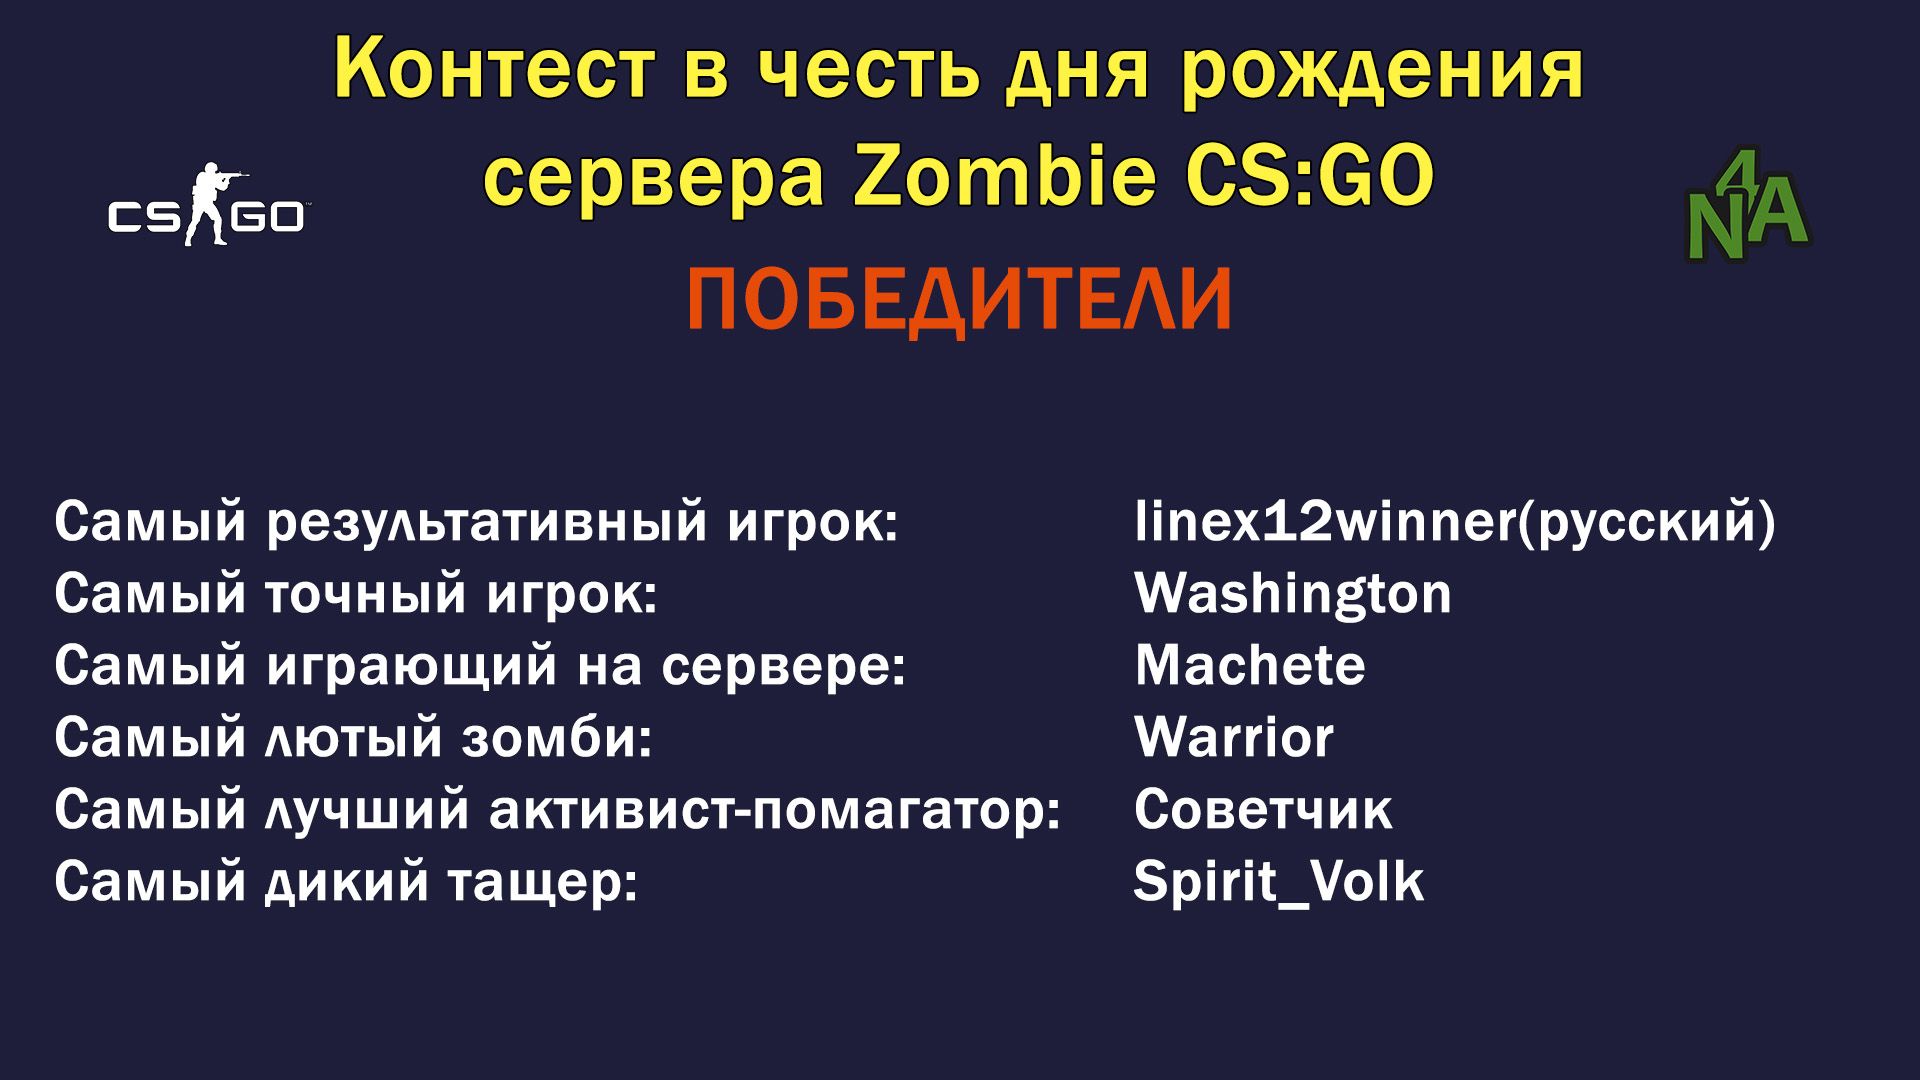 csgo_contest.jpg